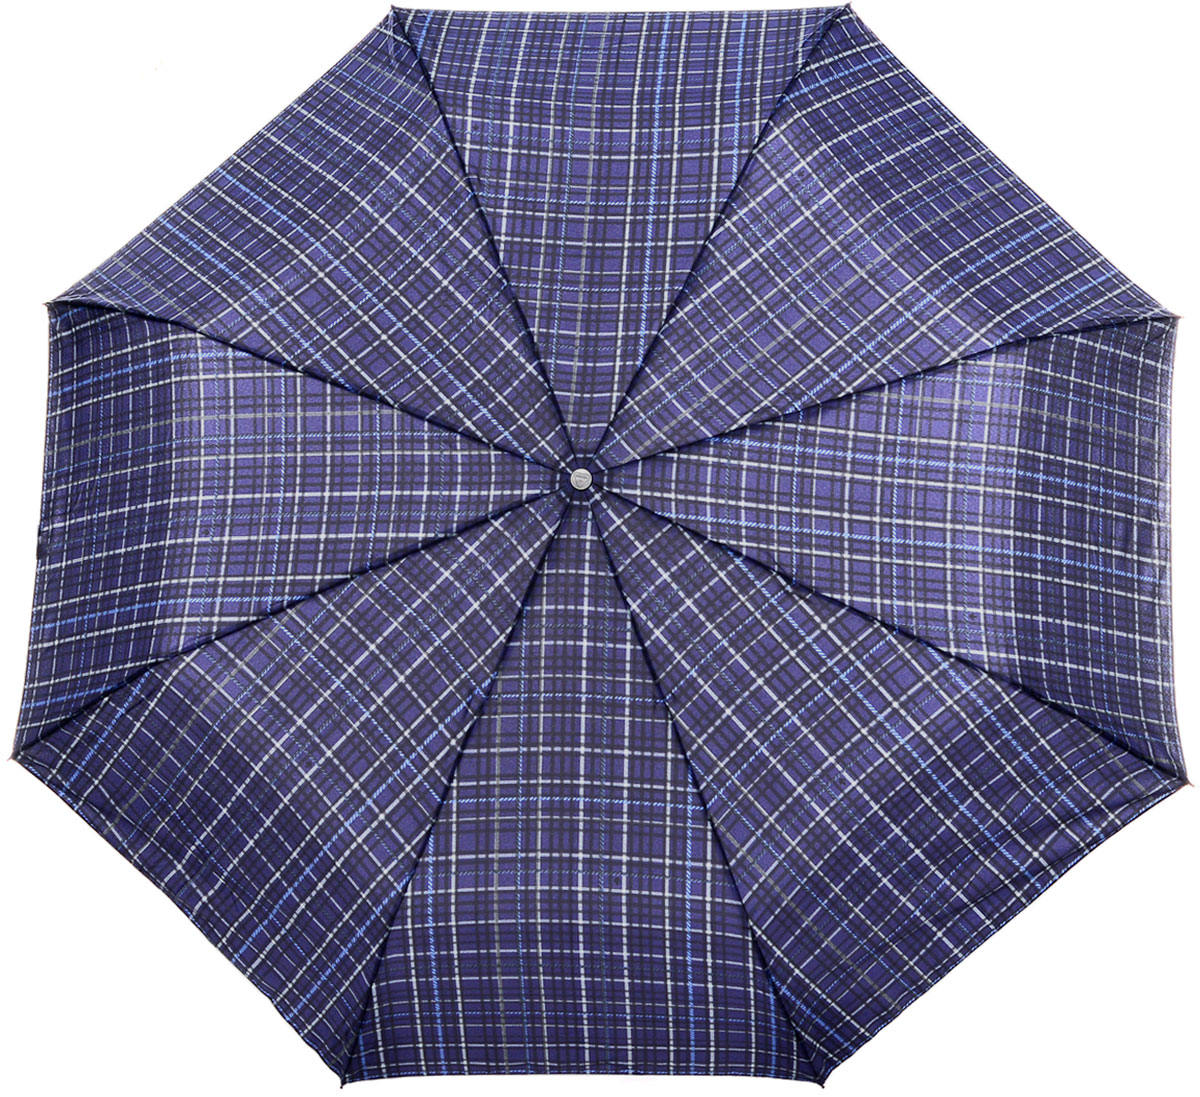 Зонт мужской Fulton, автомат, 3 сложения, цвет: темно-синий. G842-3046